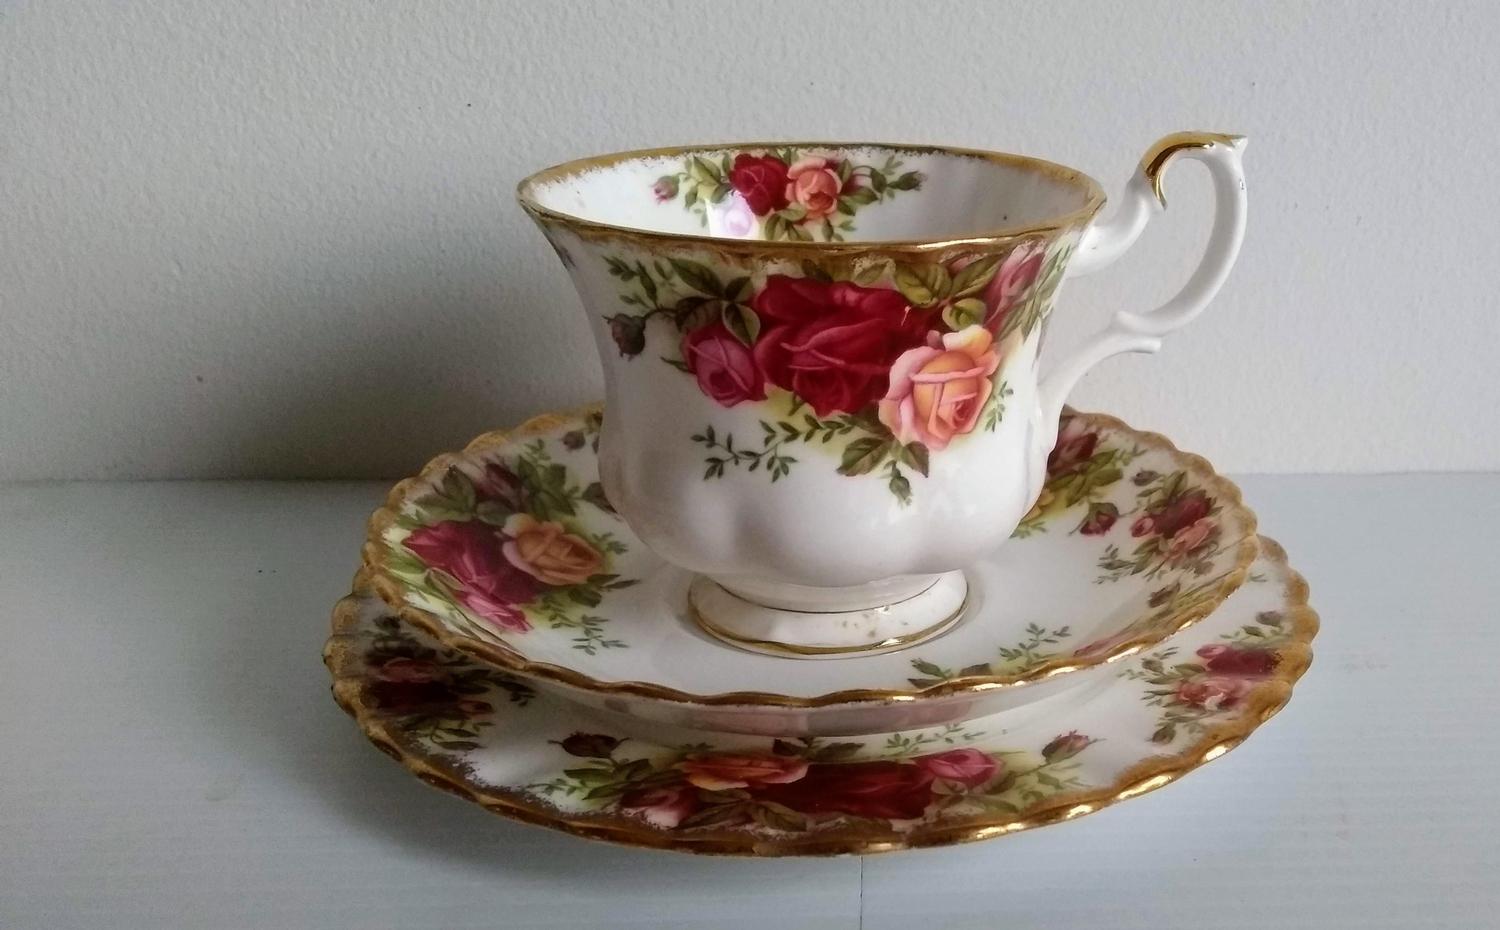 A Royal Albert Old Country Roses tea service comprising 6 cups/saucers/plates, sugar bowl, jug and